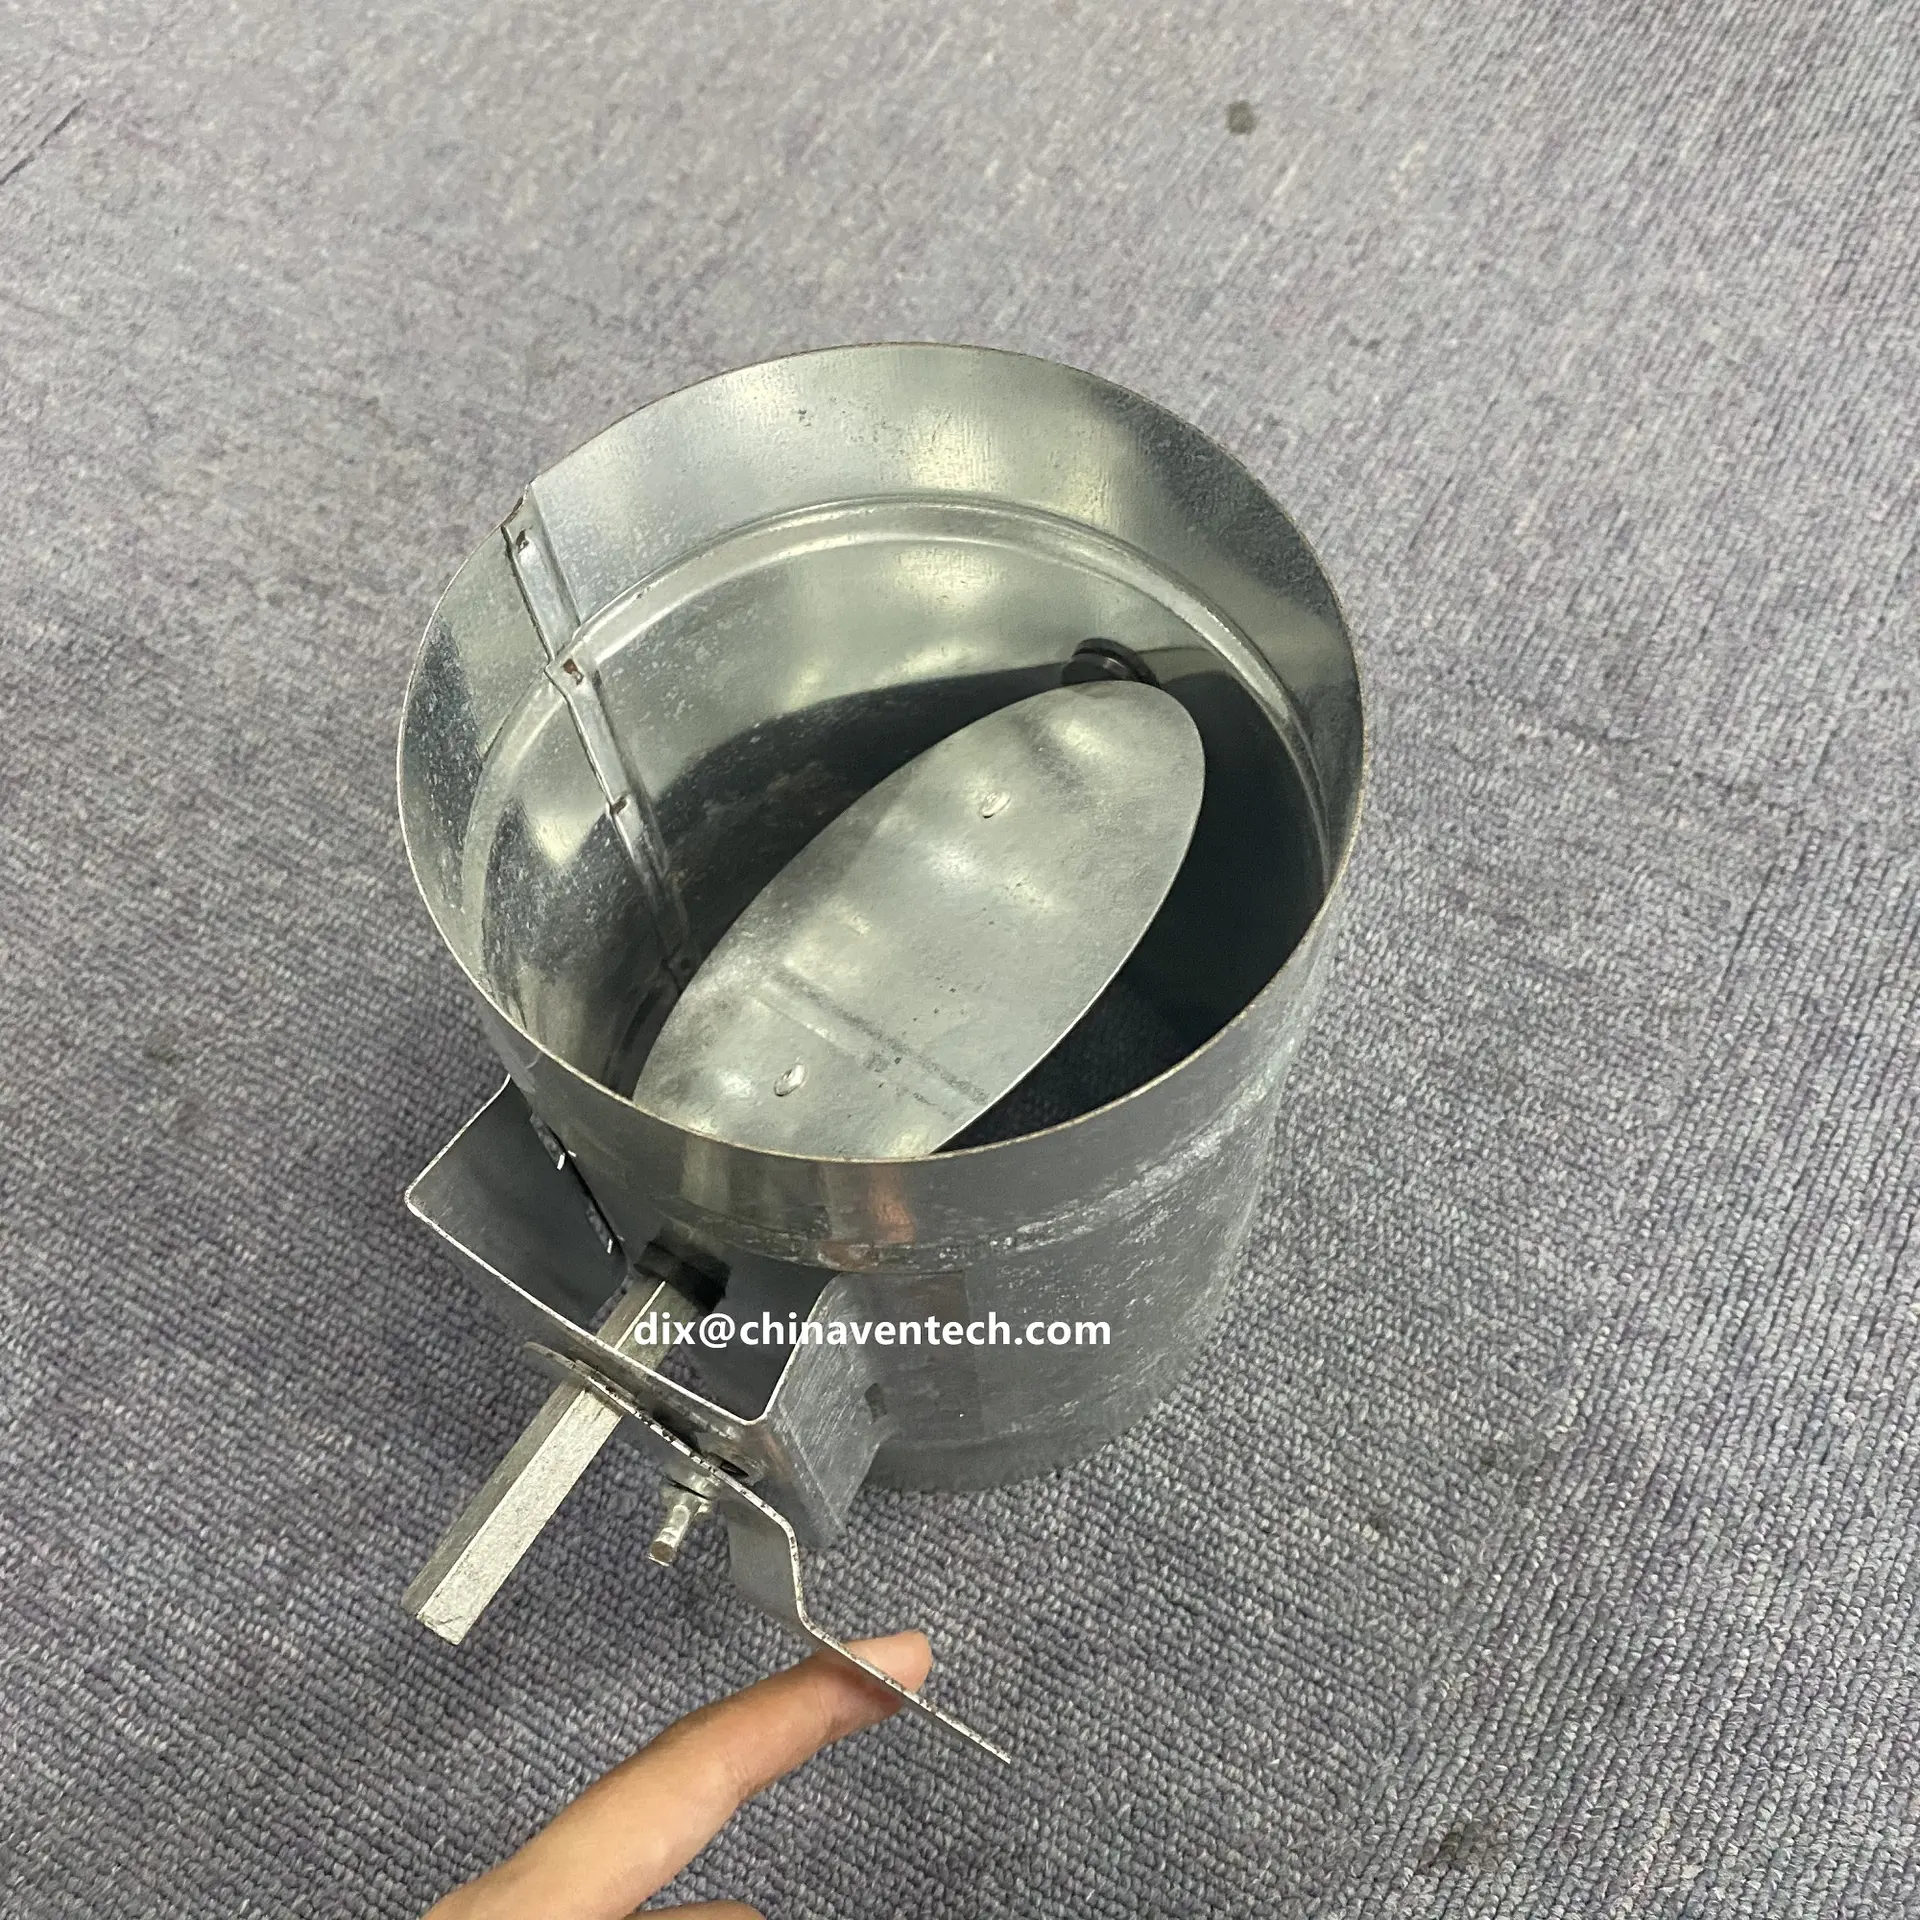 Hvac ventilation air ducting metal steel material round volume control damper